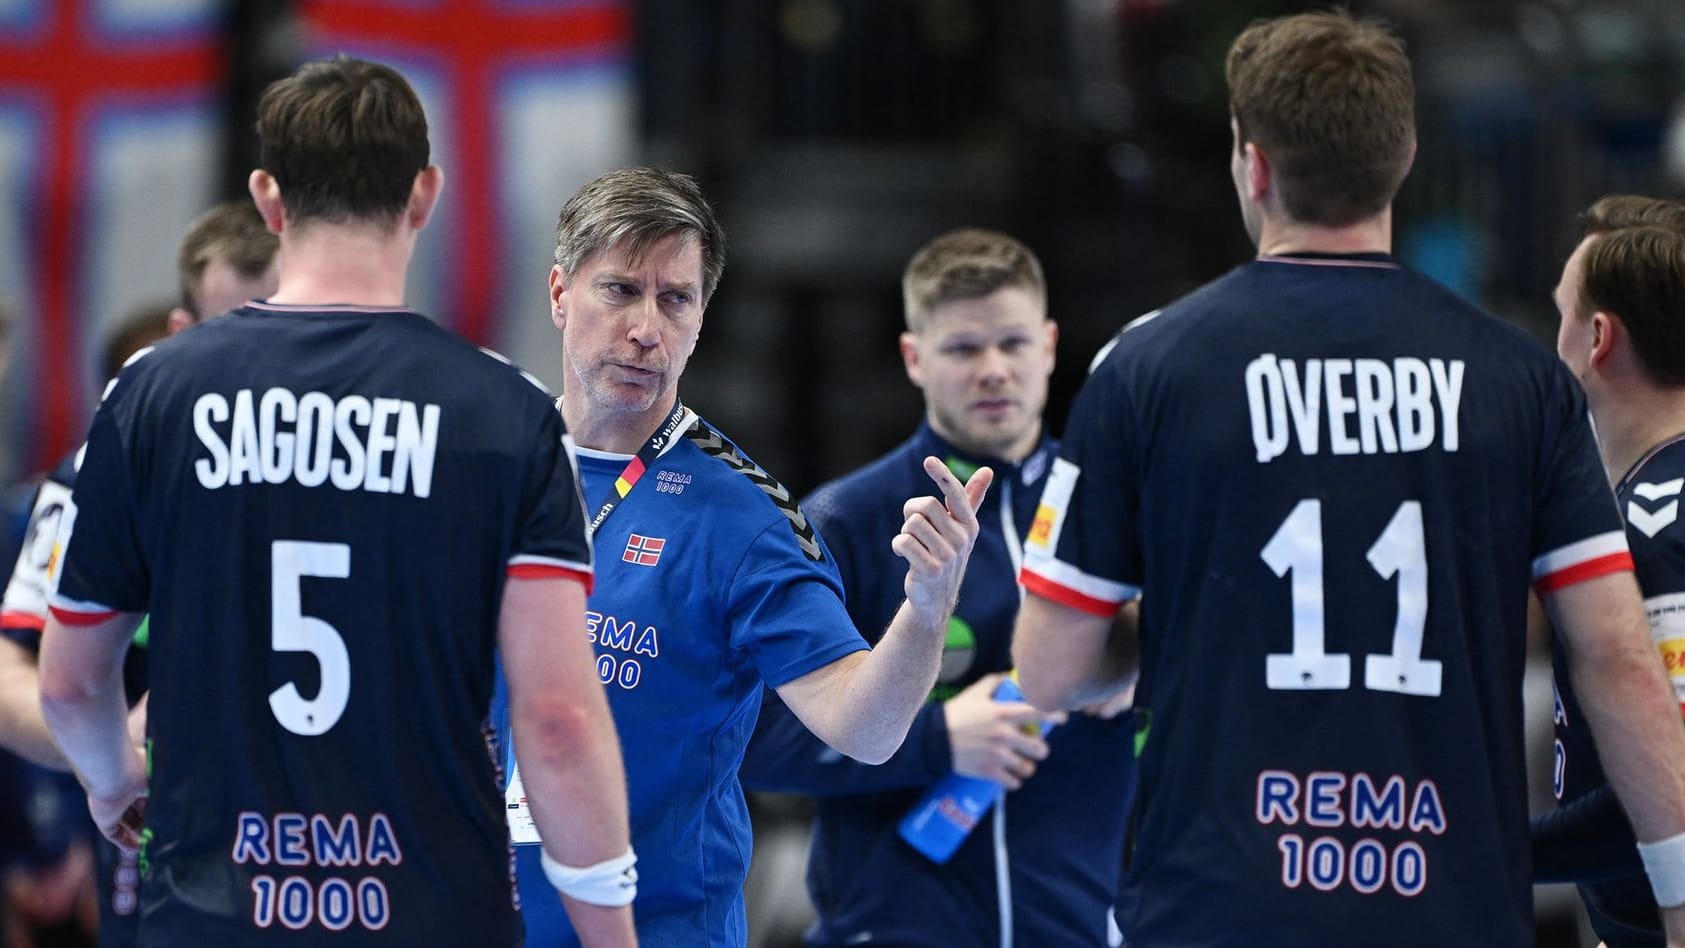 Handball-EM: Dicke Überraschung – Norwegen stolpert und muss zittern